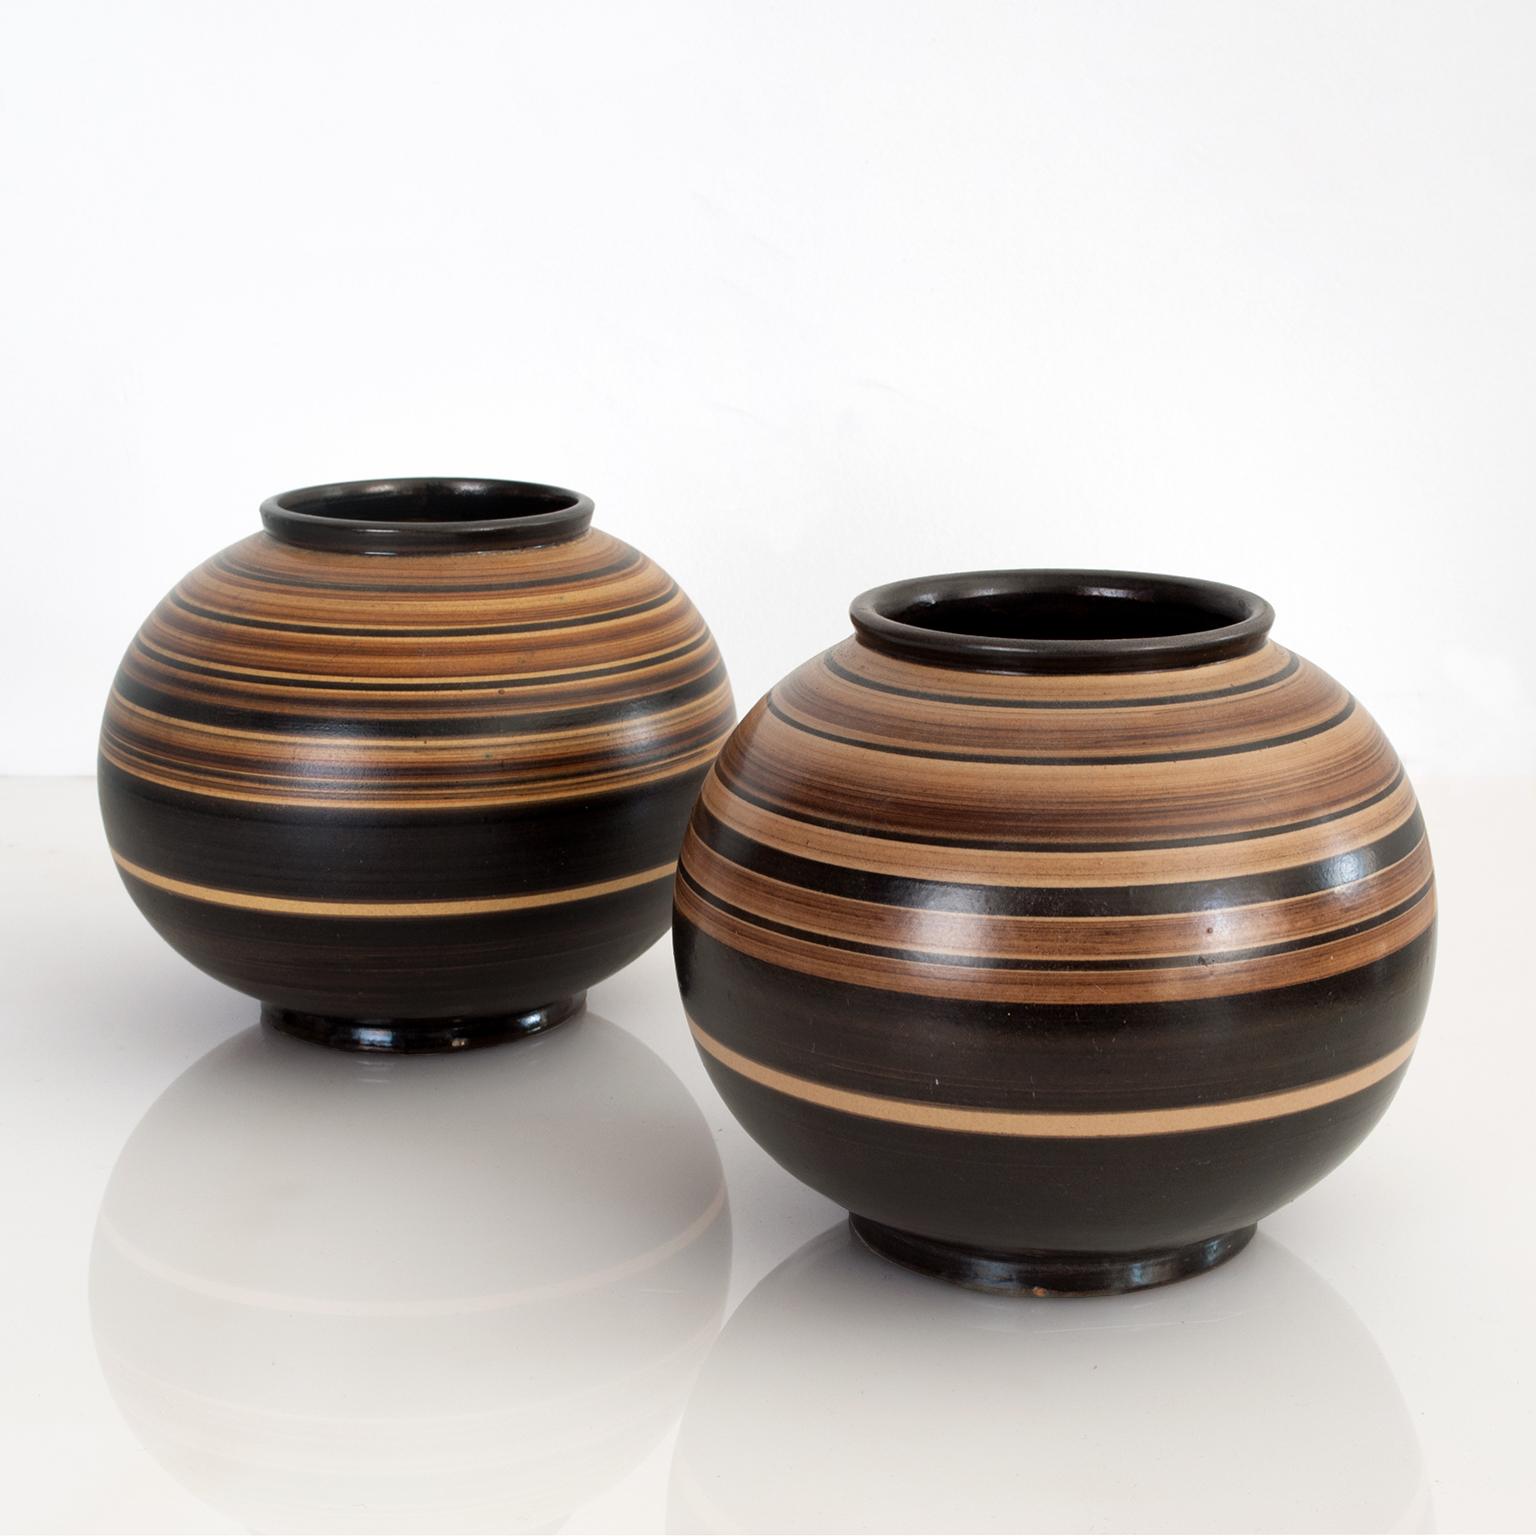 Pair of Scandinavian Modern striped ceramic vases in dark to pale brown glazes. Designed by artist Jerk Werkmaster for Nittsjo, Sweden, circa 1930s.
Measures: Height 6